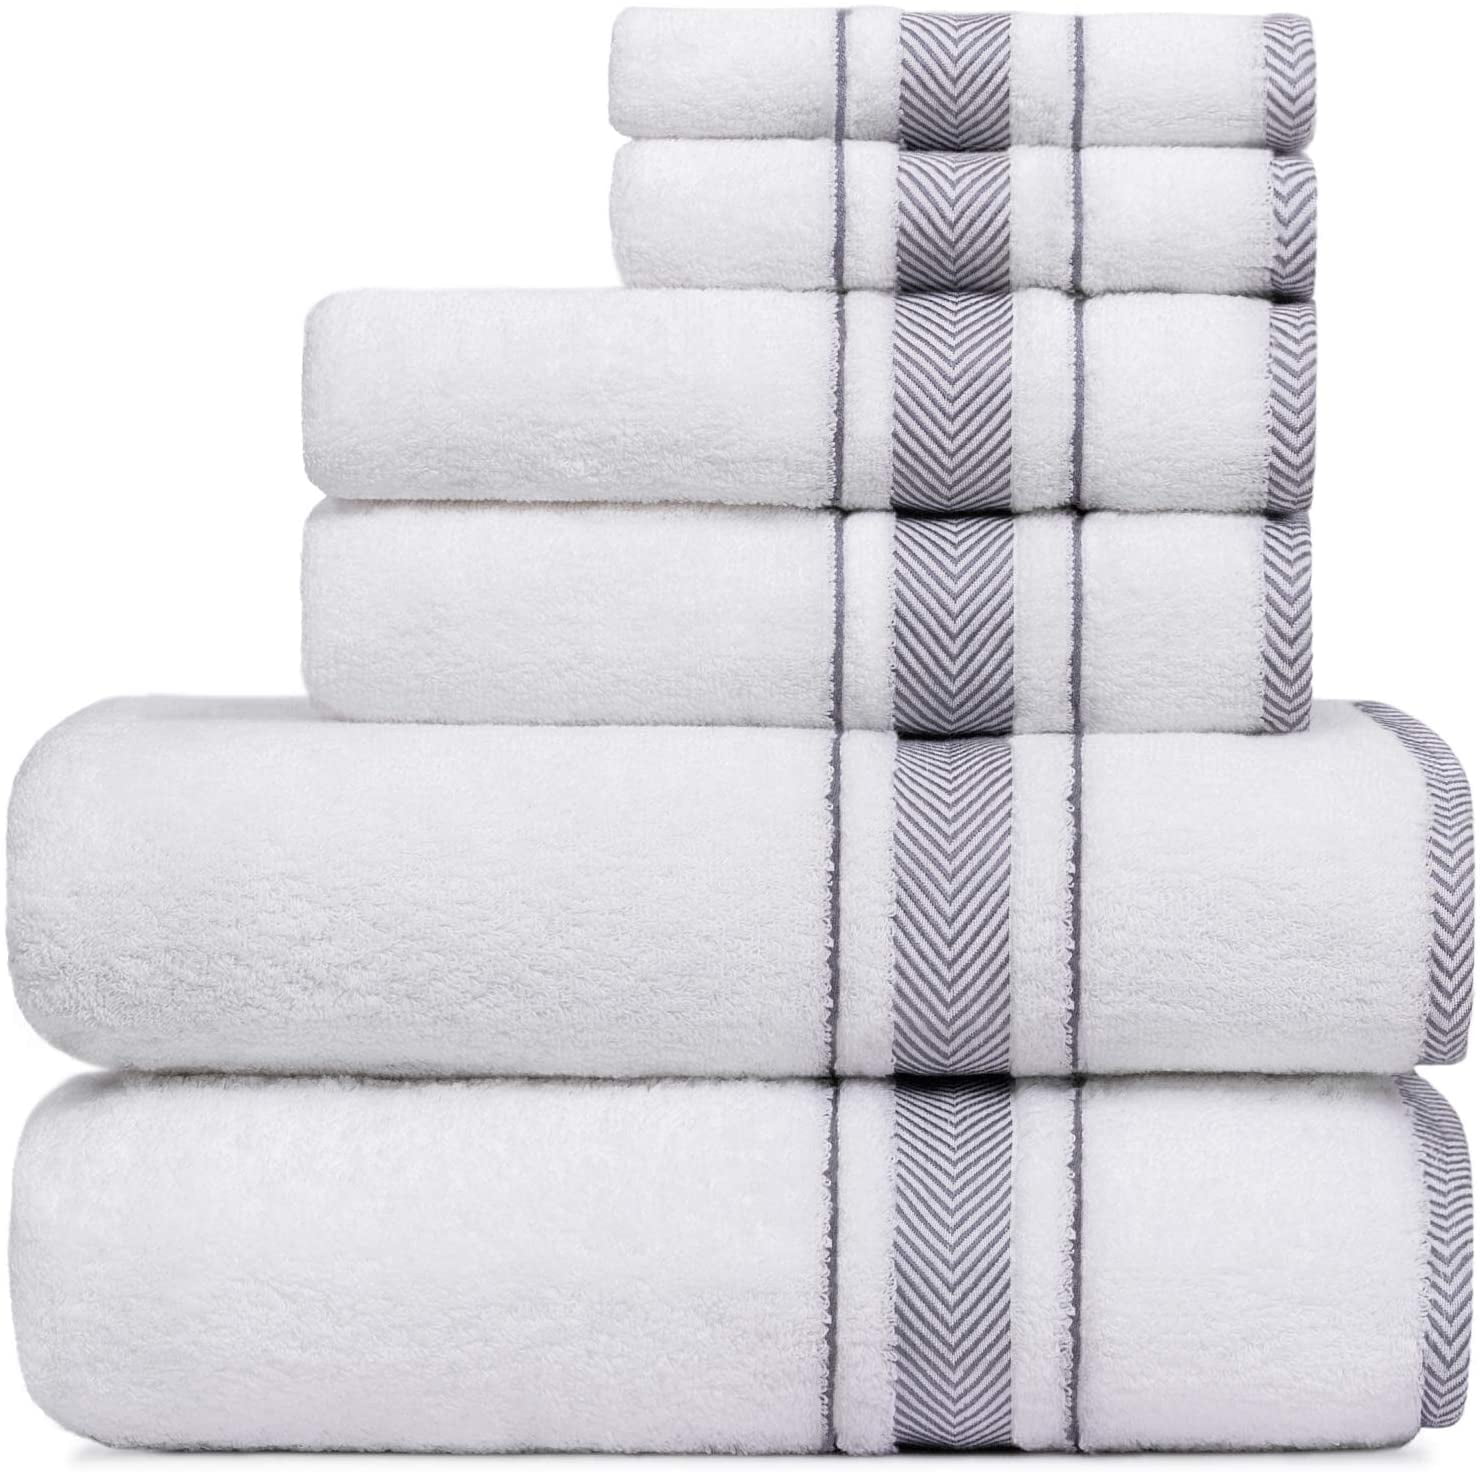 6 Piece Bath Towel Set for Bathroom Soft and Absorbent Spa Shower 